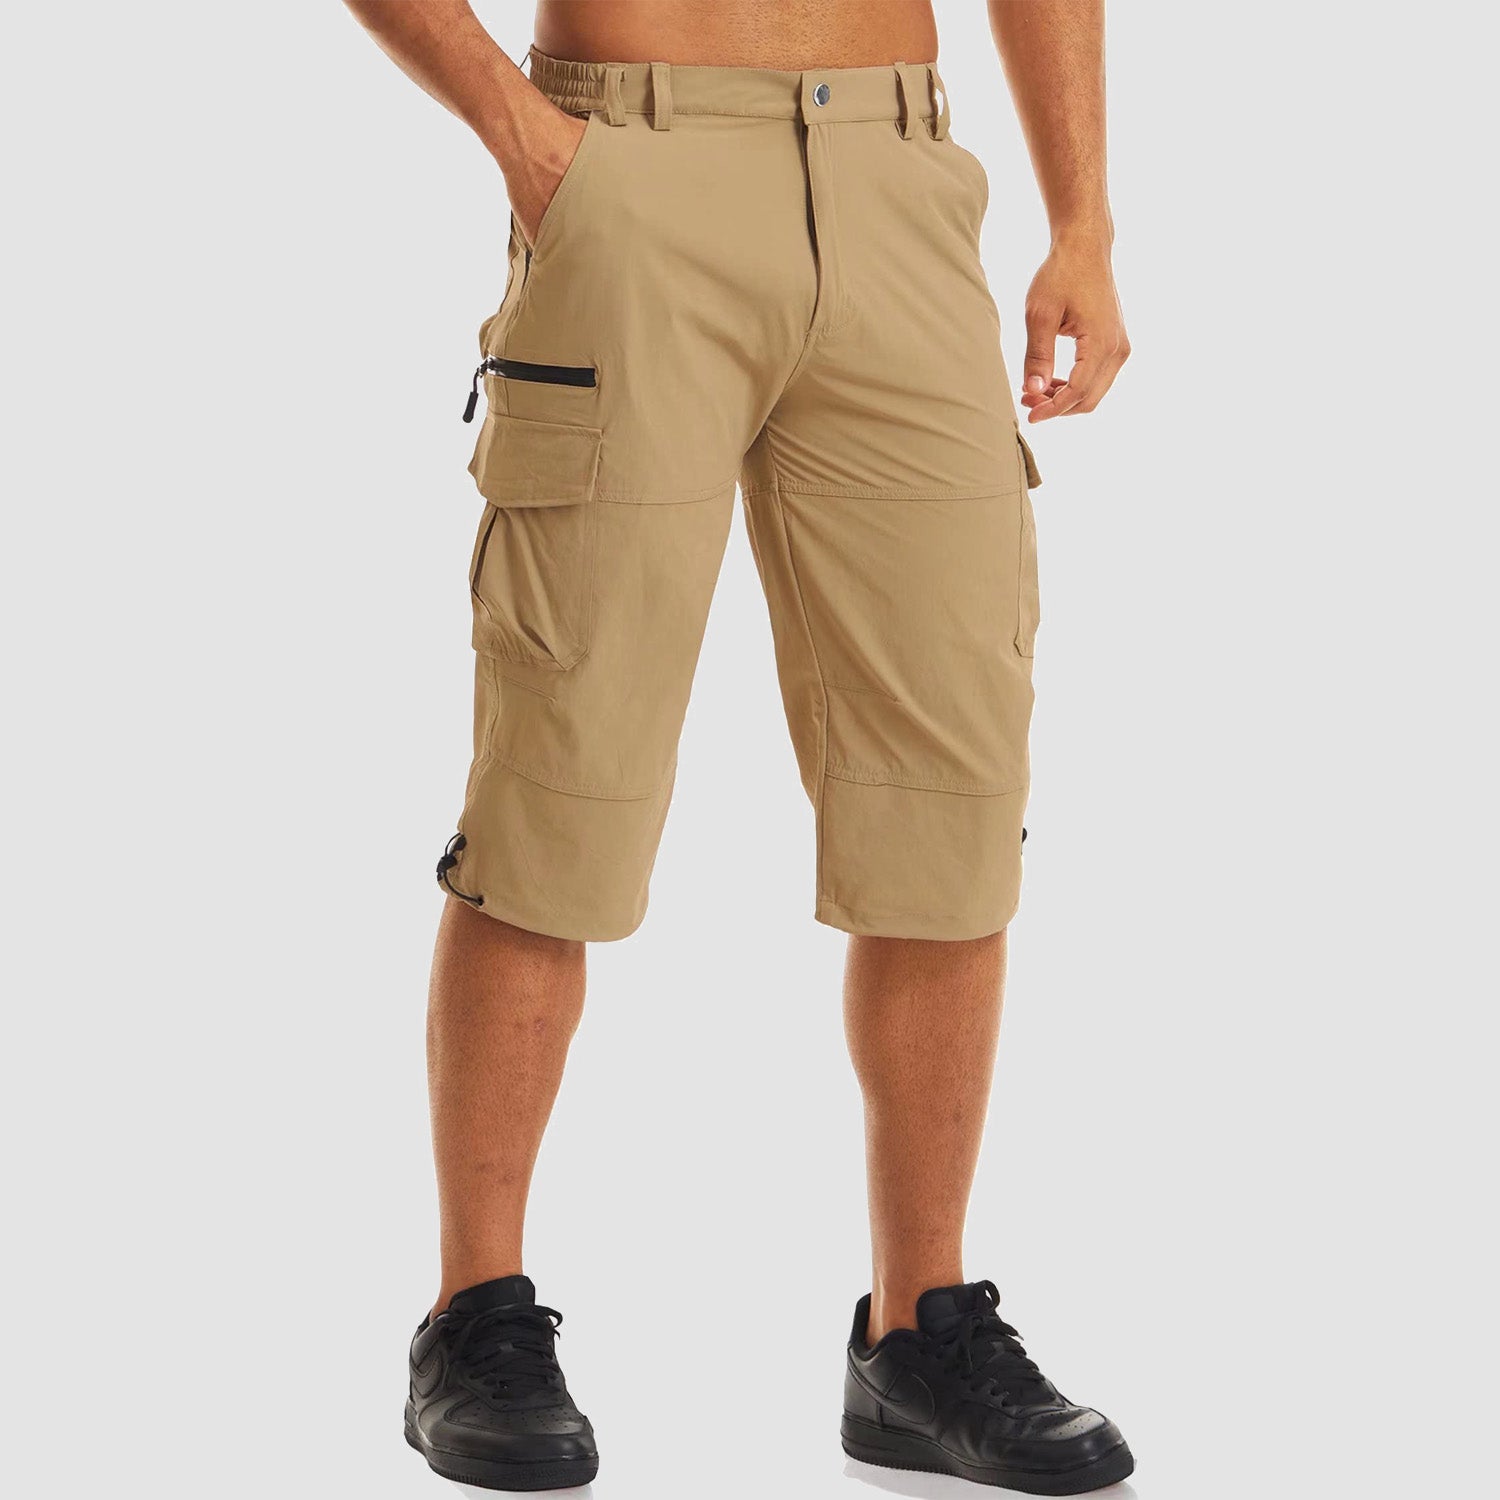 MAGCOMSEN Men's 3/4 Joggers Capri Pants with Zipper Pockets Slim Fit  Training Running Workout Capri Joggers : : Clothing, Shoes &  Accessories